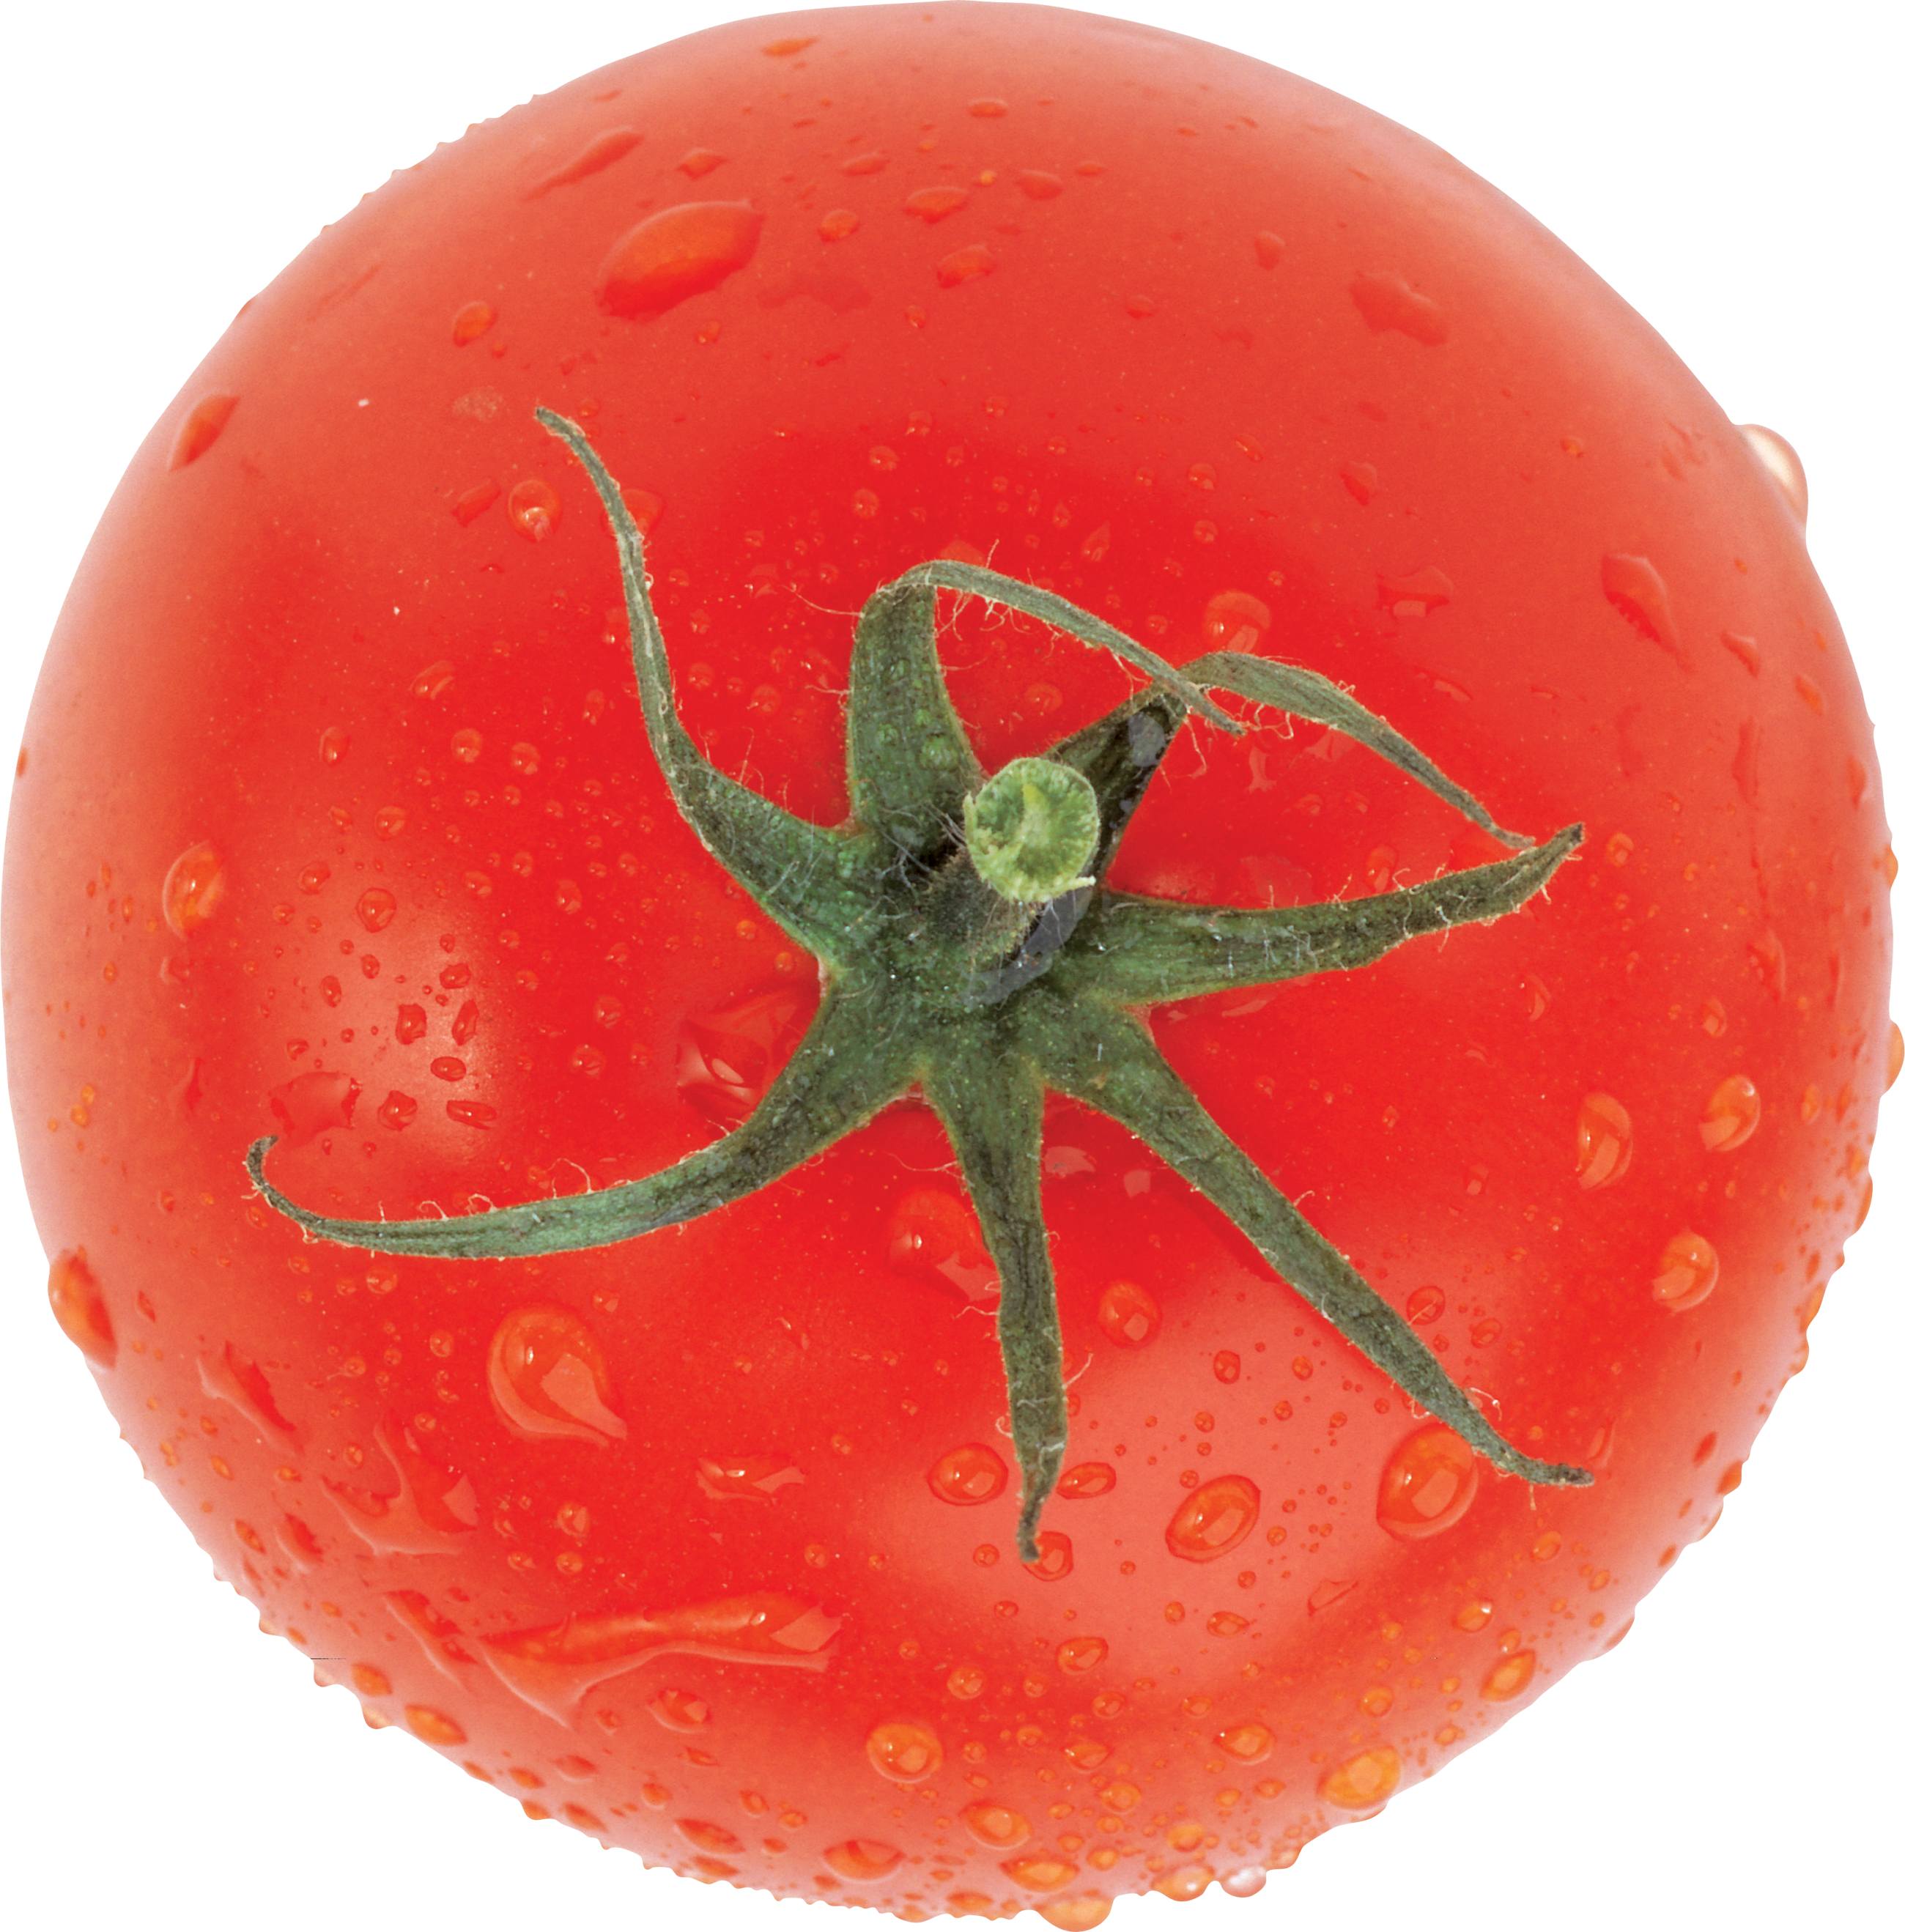 Tomato PNG image transparent